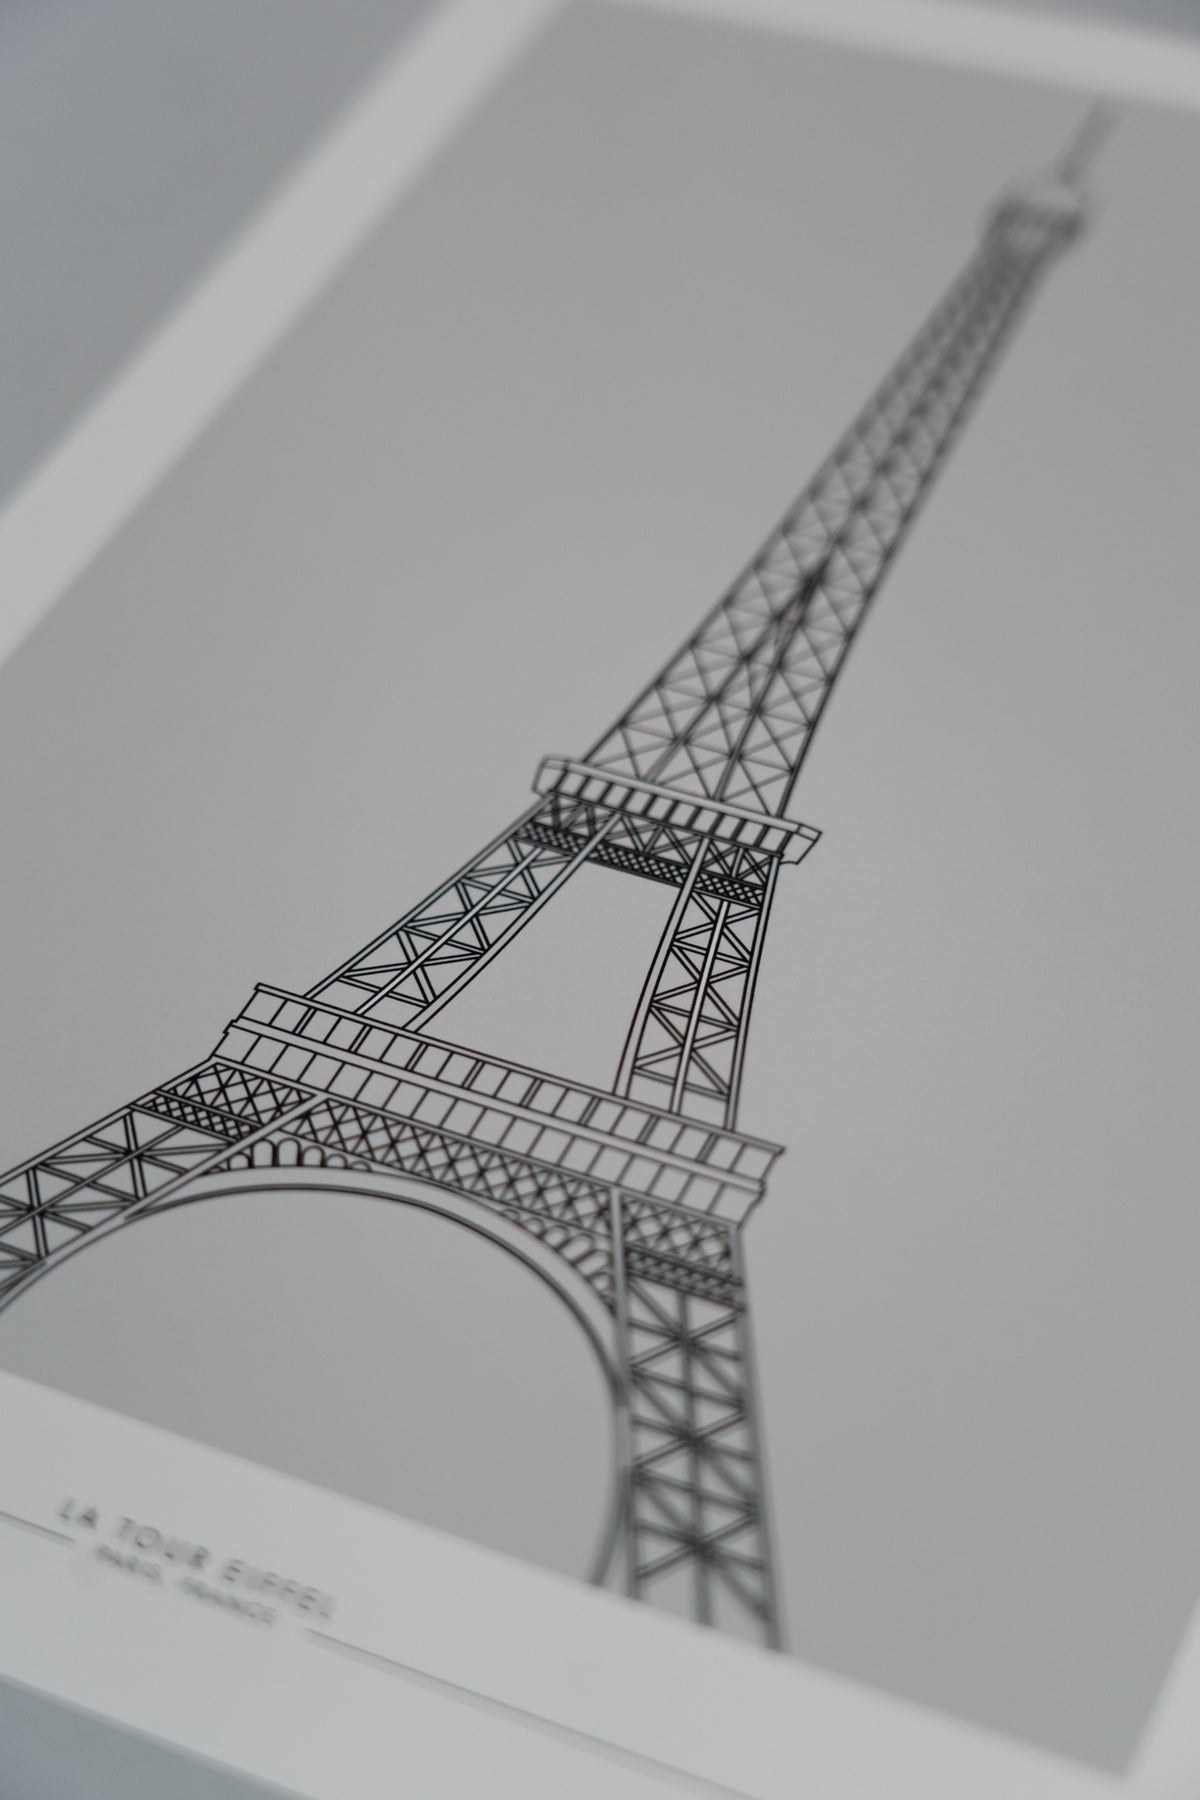 Eiffel Tower Print